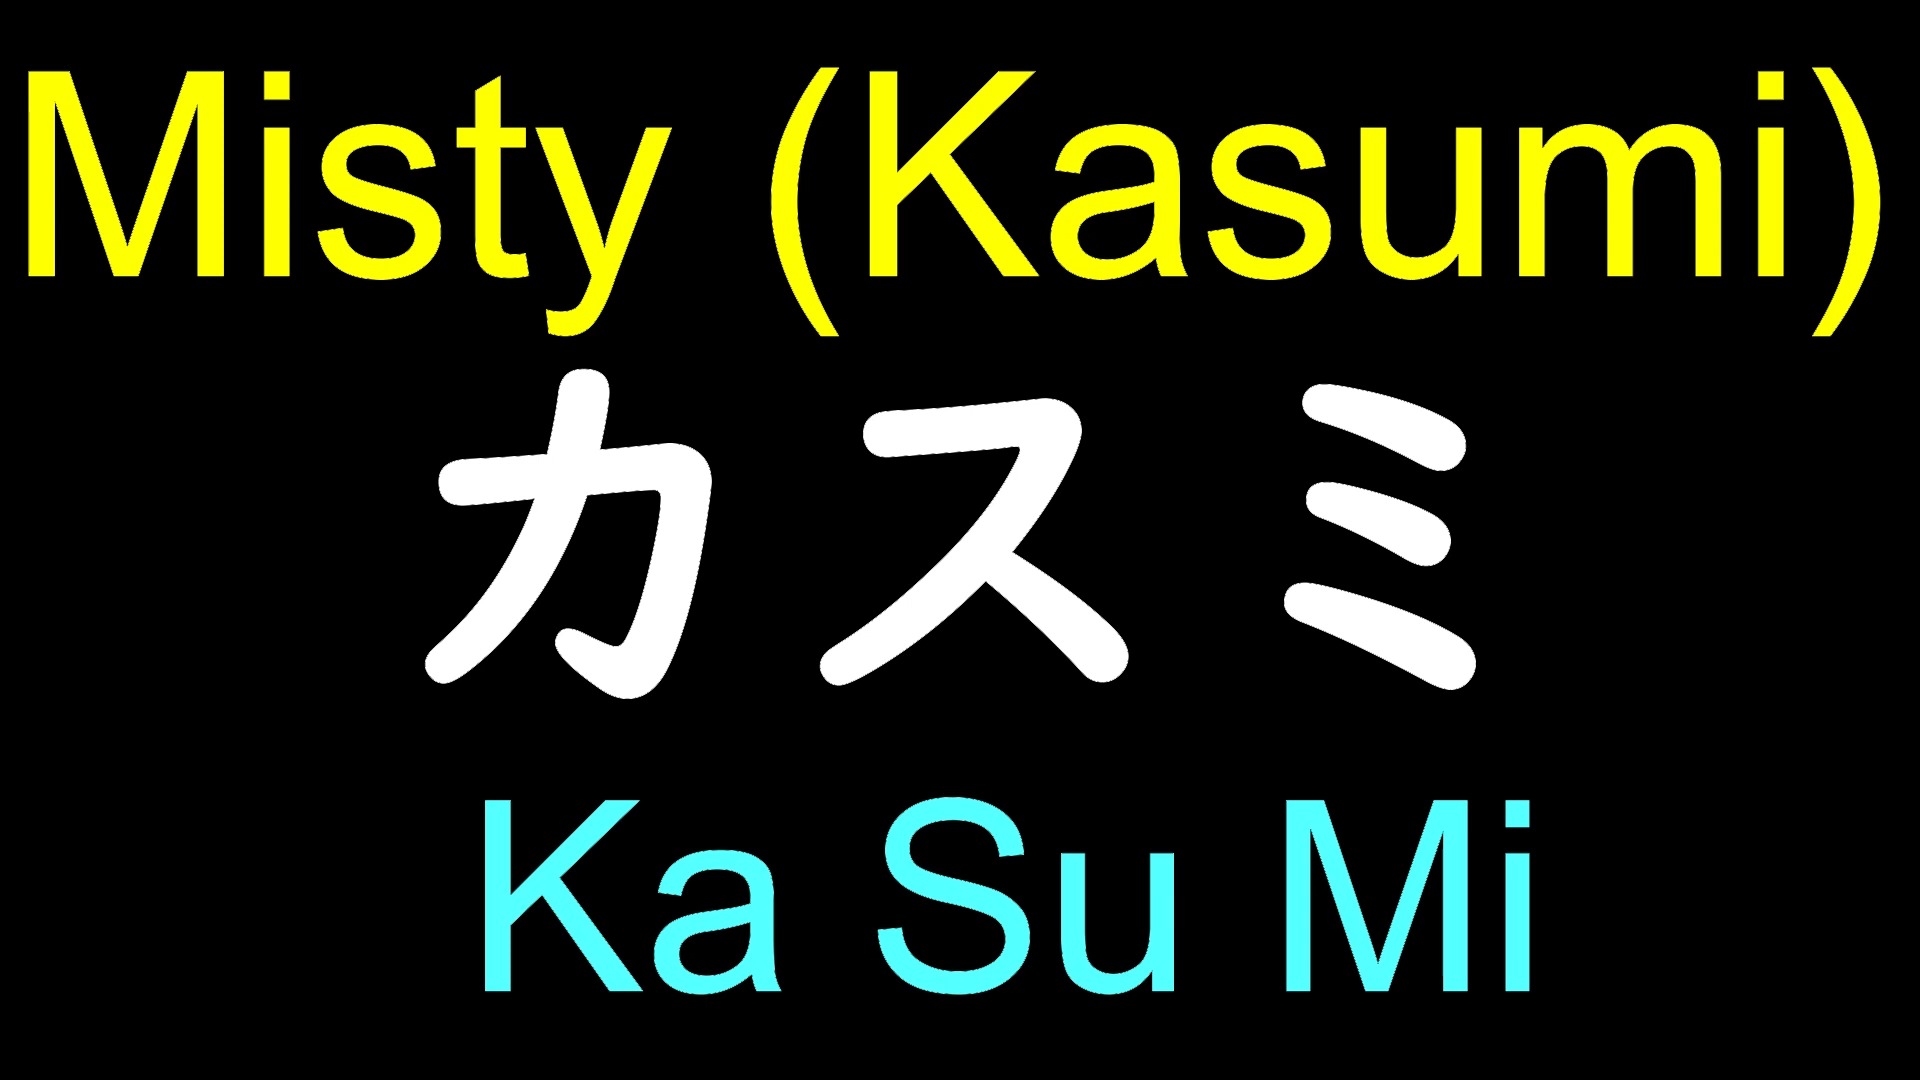 Misty (Kasumi) Name